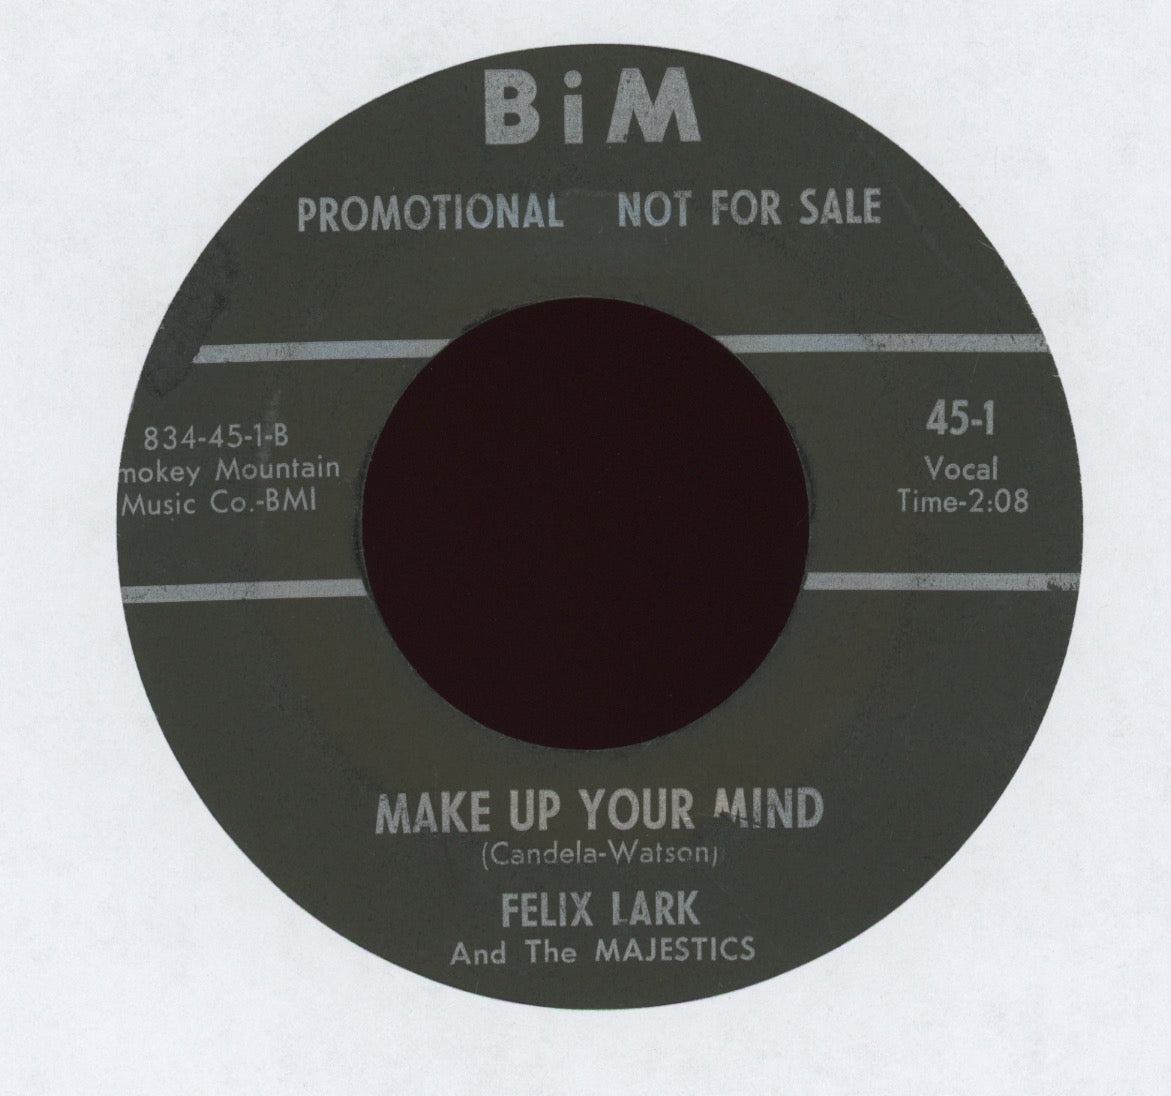 Felix Lark And The Majestics - Make Up Your Mind on Bim Promo R&B 45